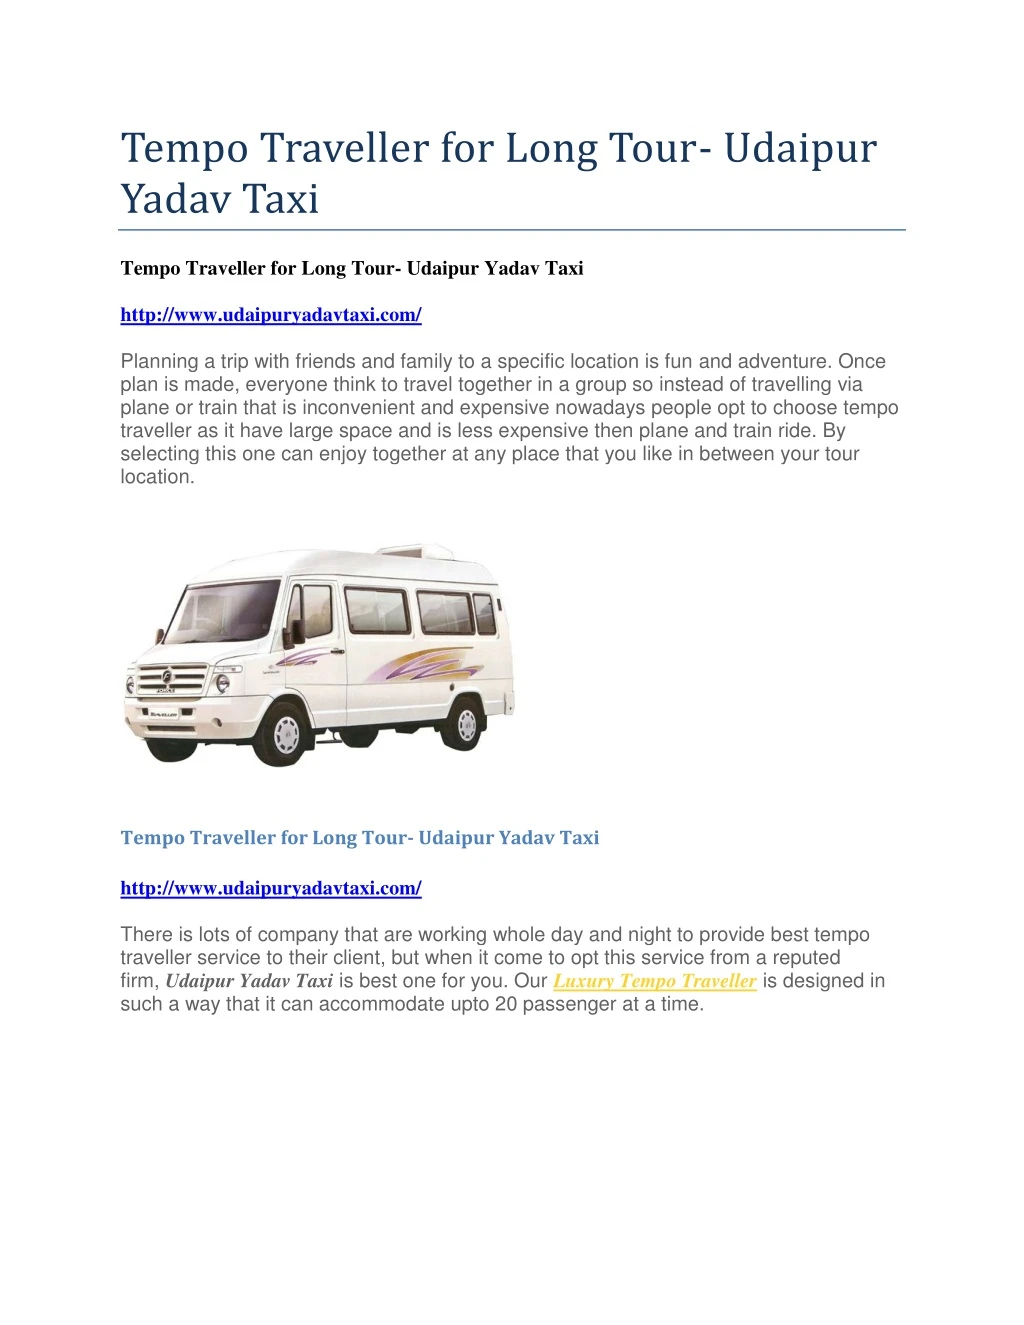 tempo traveller for long tour udaipur yadav taxi